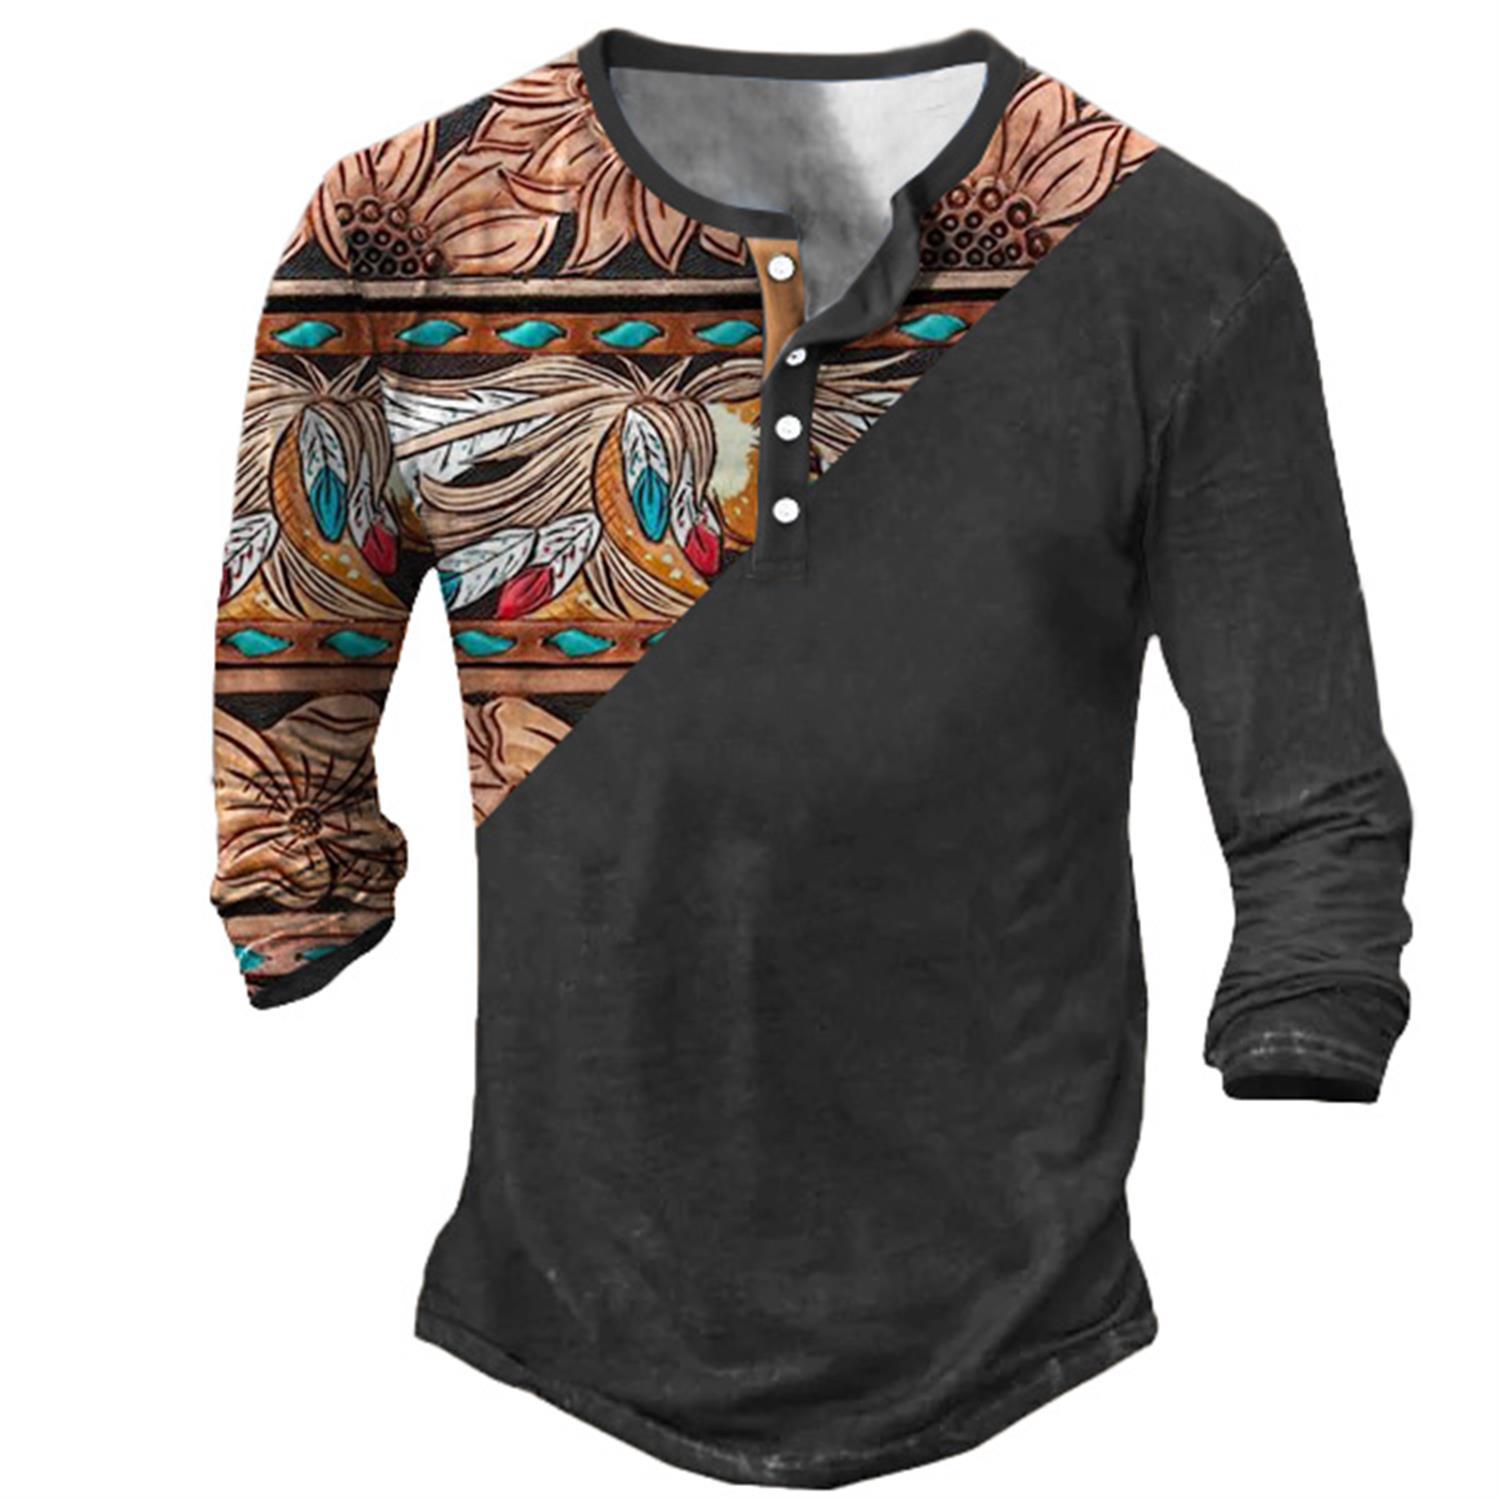 Men's Vintage Western Ethnic Chic Henley T-shirt